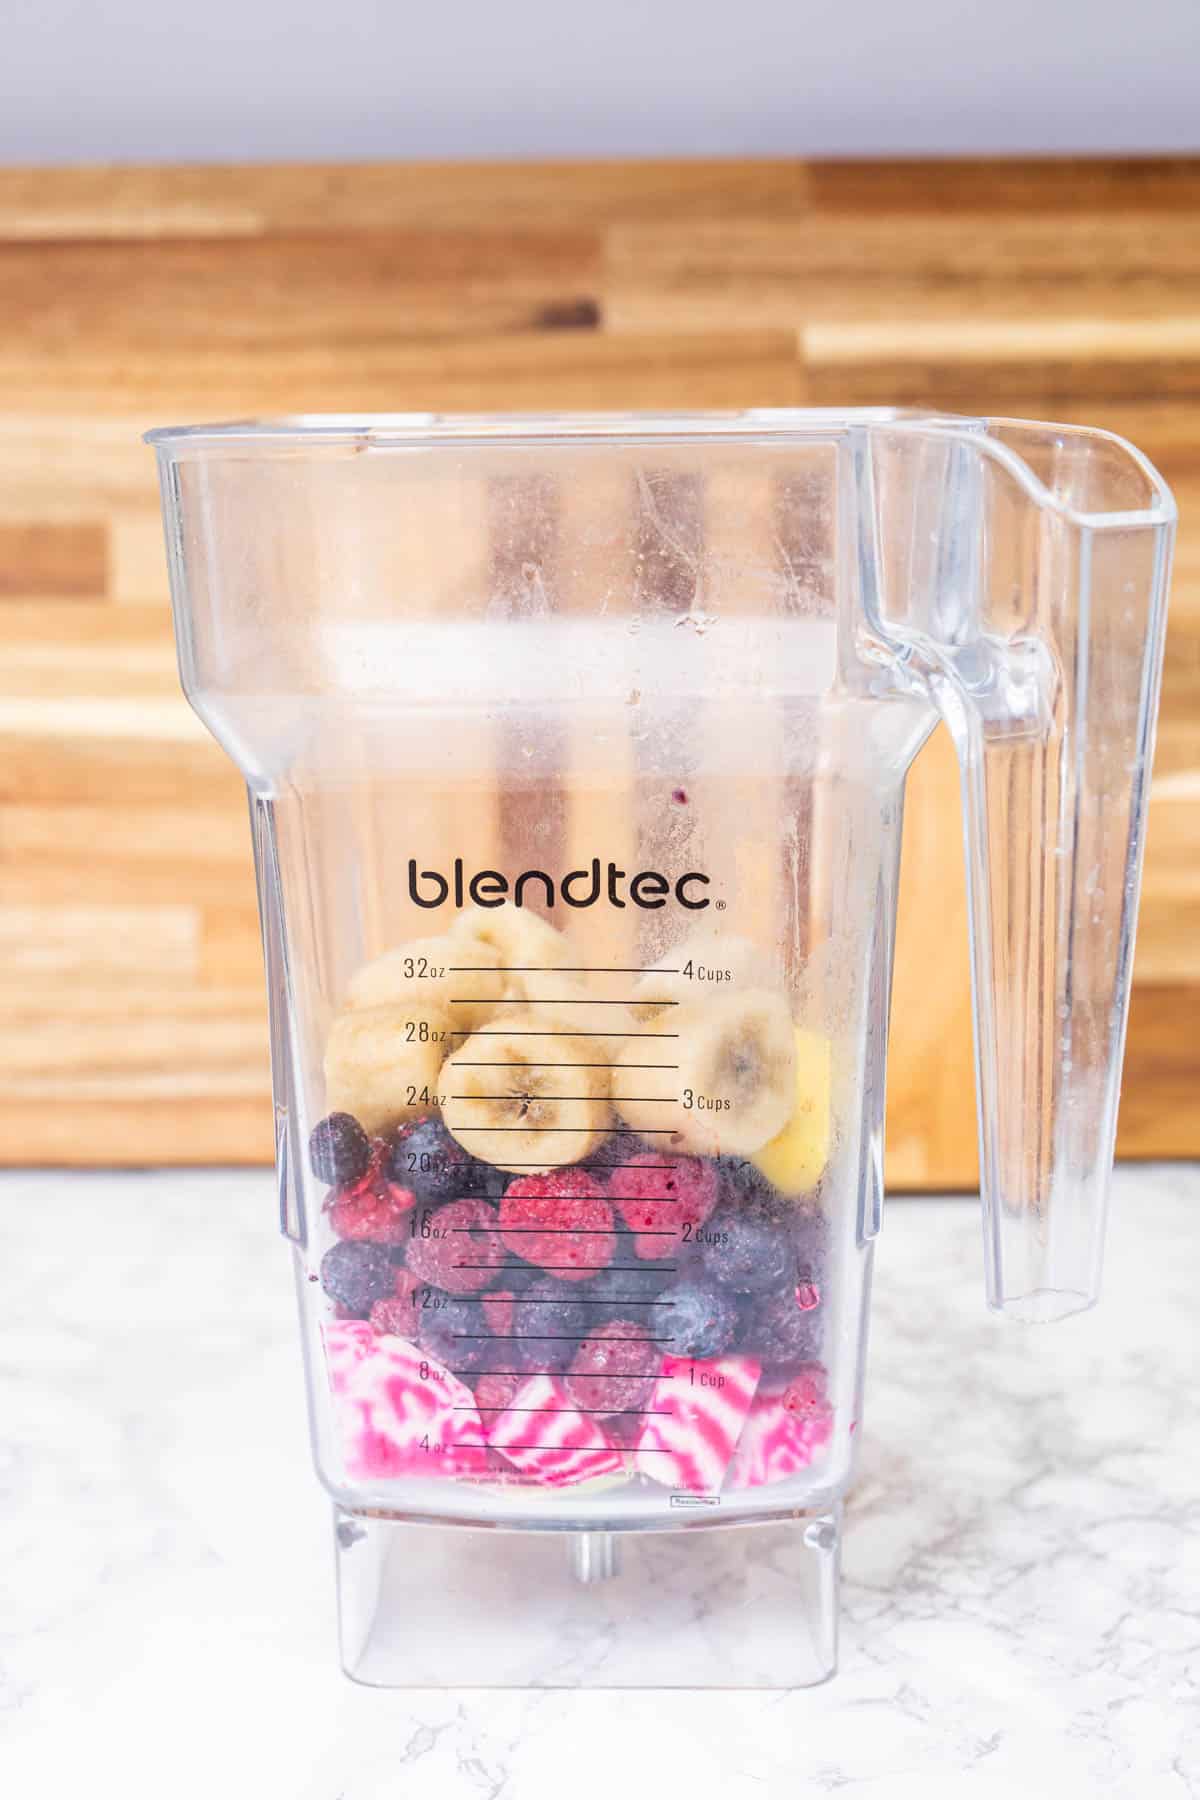 Banana, berries, and chopped beets in blender jar